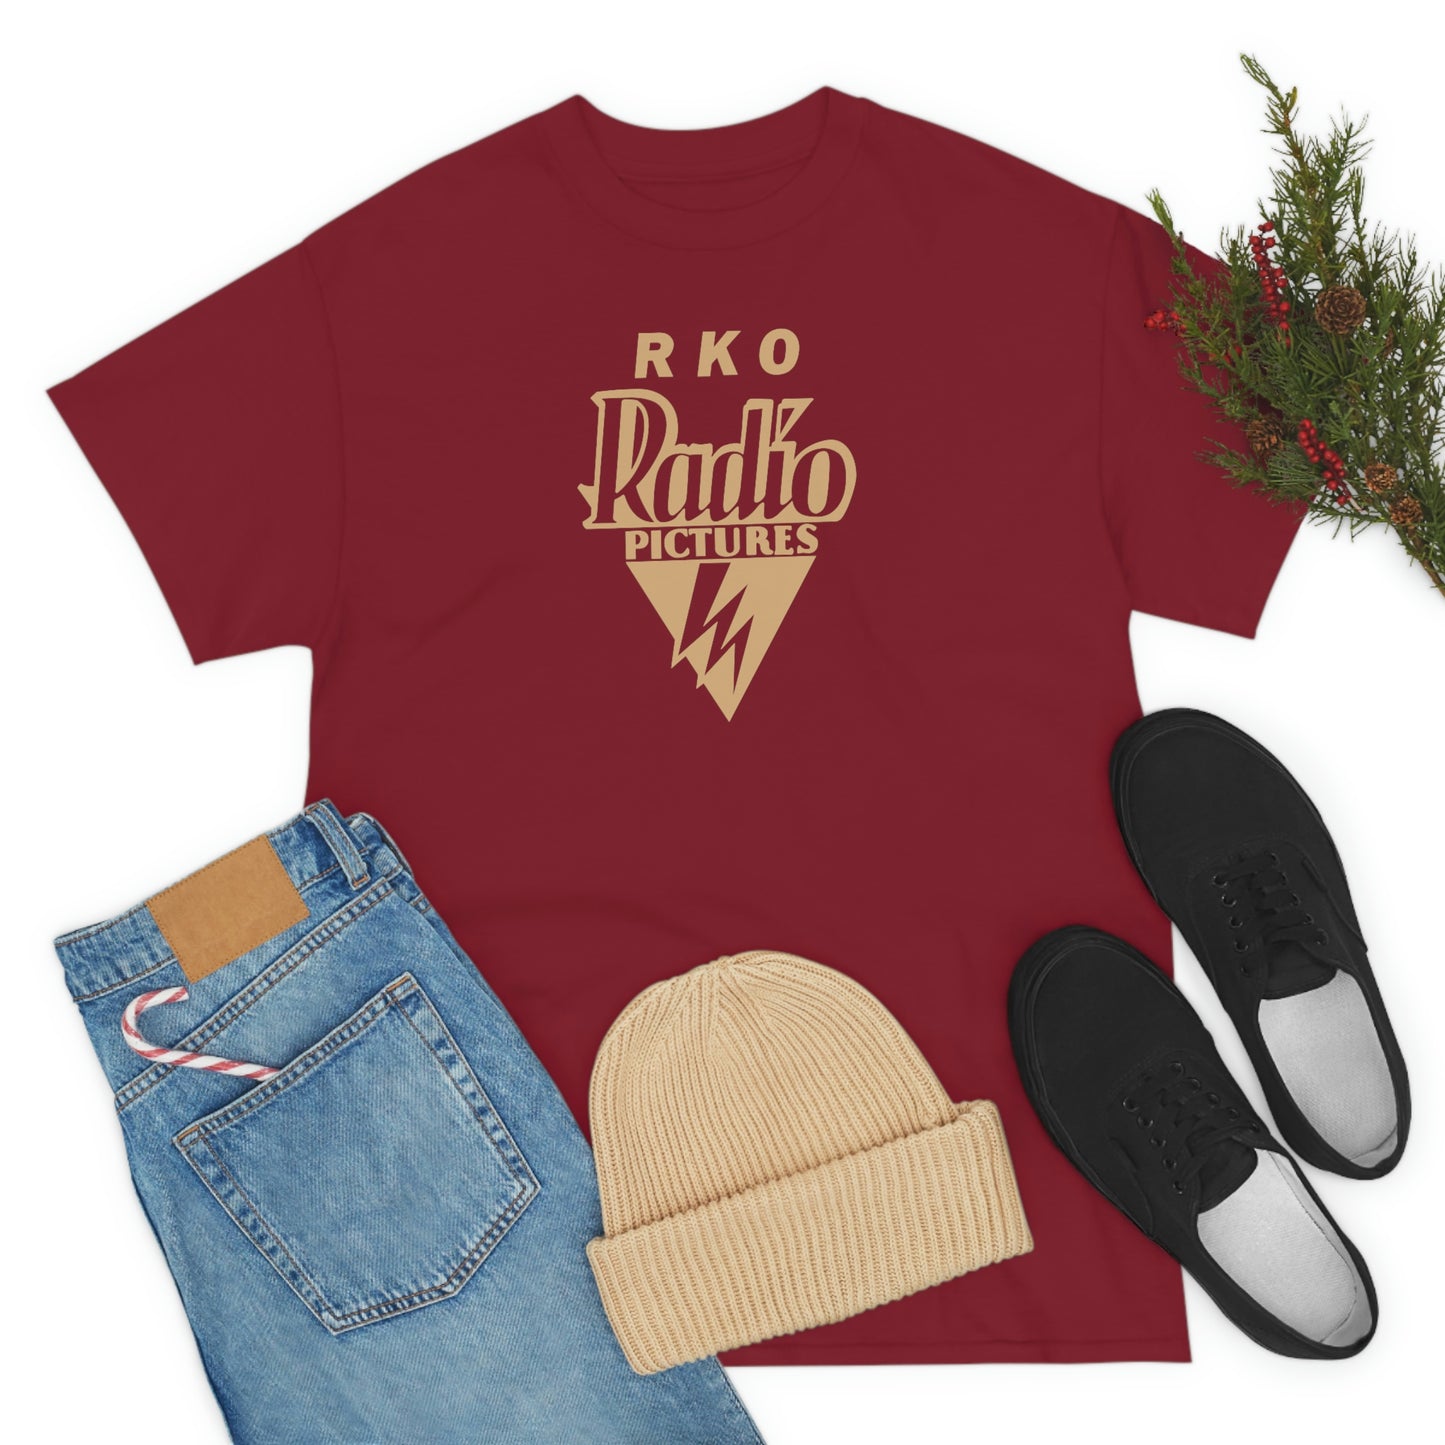 RKO Radio Pictures T-Shirt